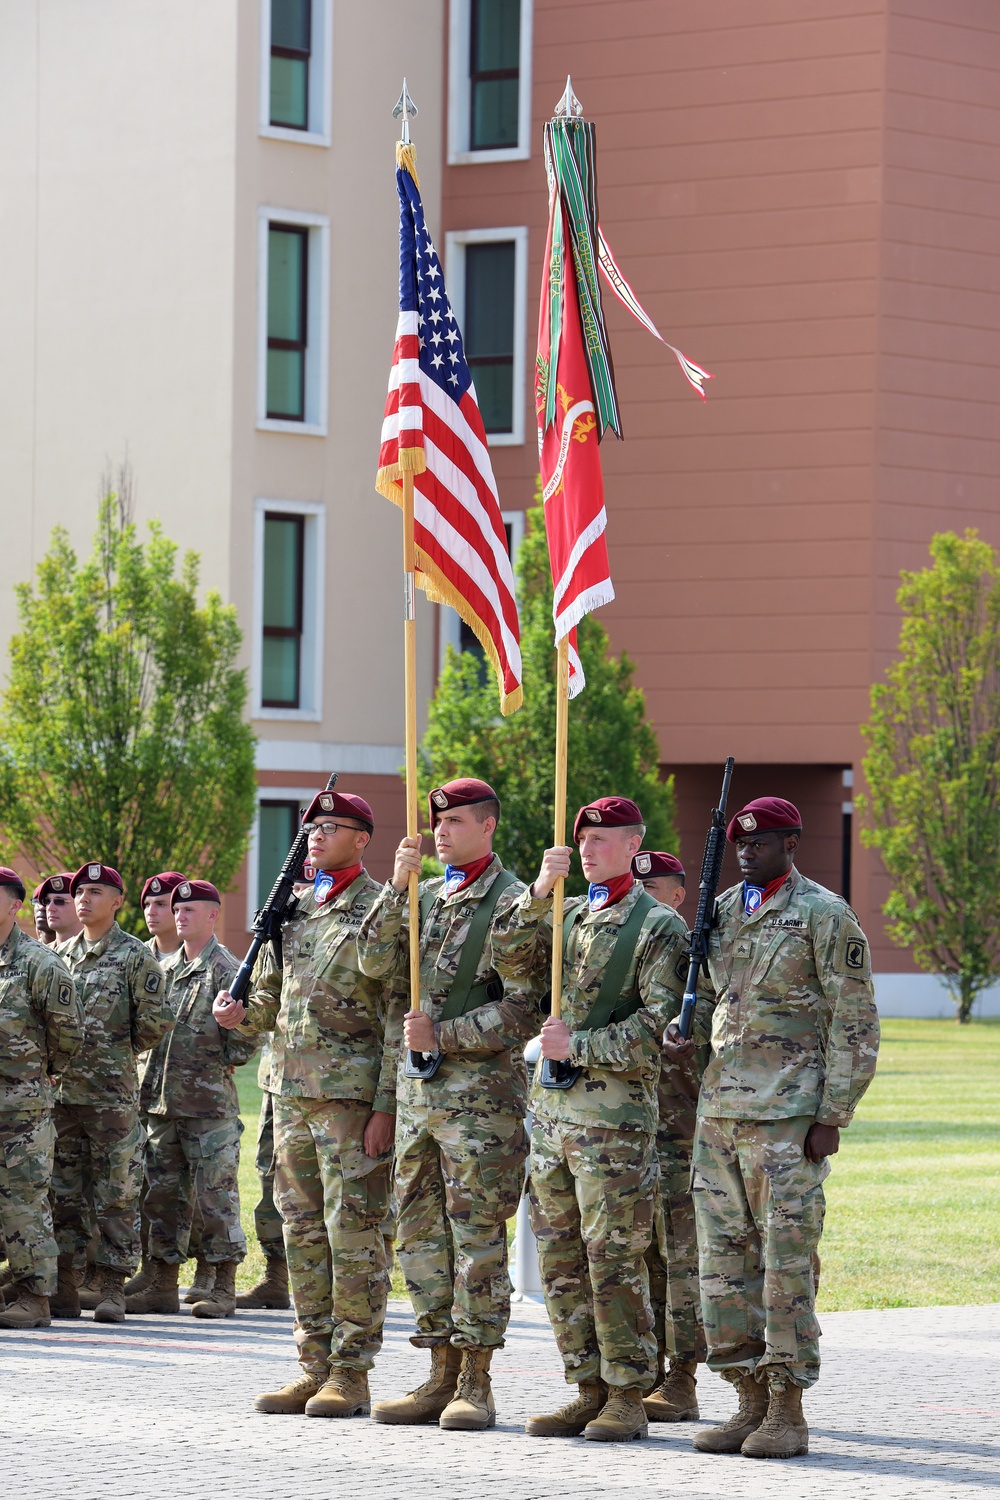 54th Brigade Engineer Battalion, 173rd Airborne Brigade, Change of Command Ceremony.